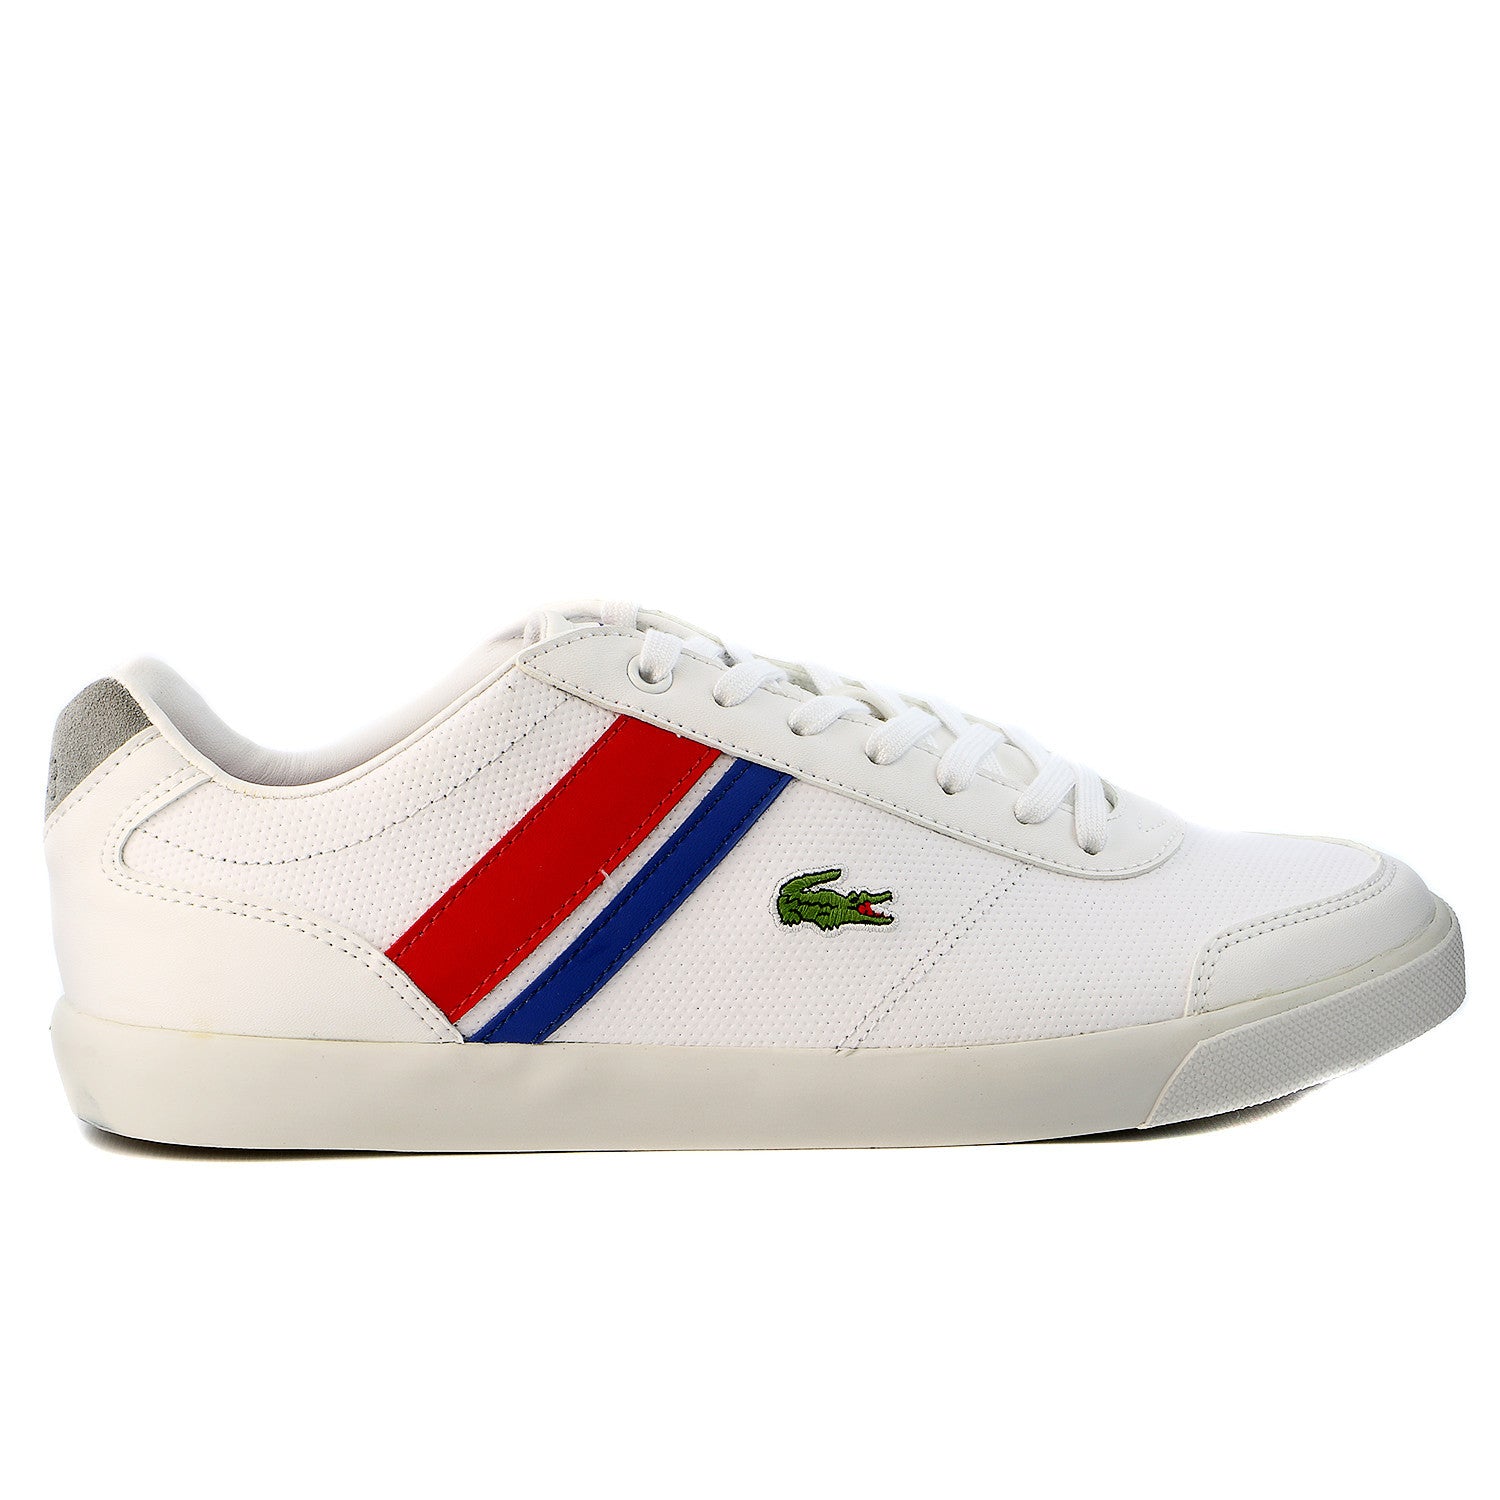 Lacoste Comba Fashion Sneaker Shoe - White/Red - Mens - Shoplifestyle